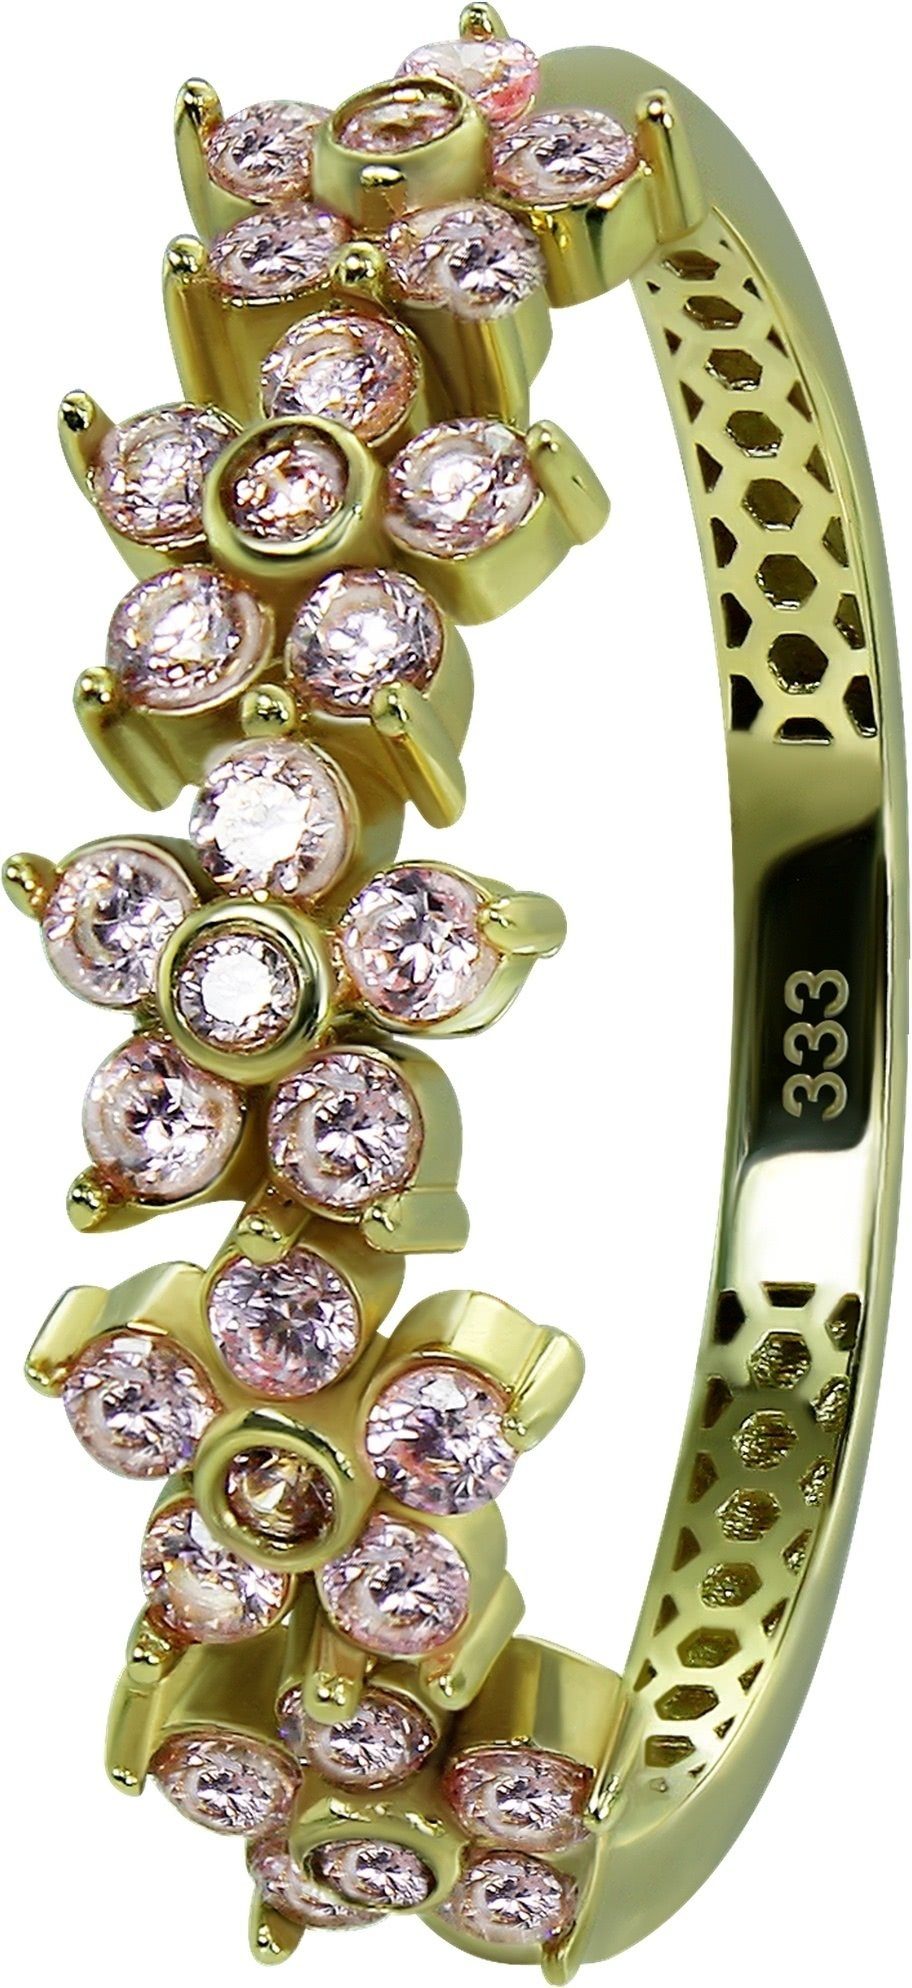 GoldDream (Fingerring), Farbe: Blumen gold, Goldring Gold Gr.58 8 Blumen rosa Karat, 333 Gelbgold Damen - Ring Ring GoldDream